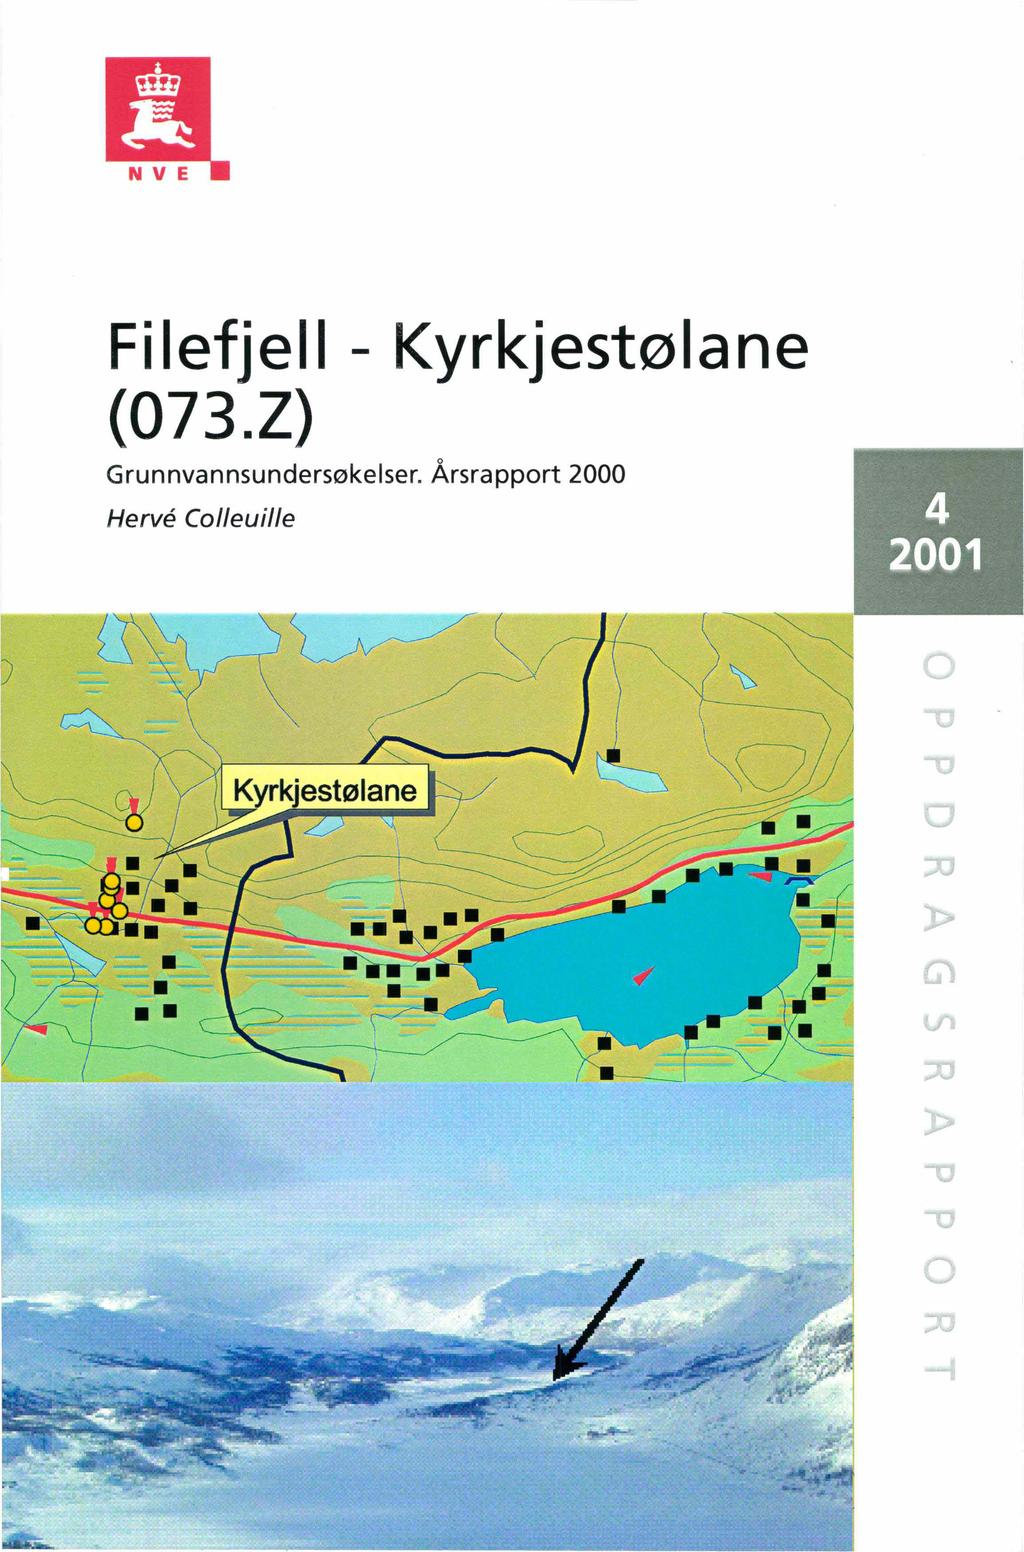 Filefjell - Kyrkjestølane (073.